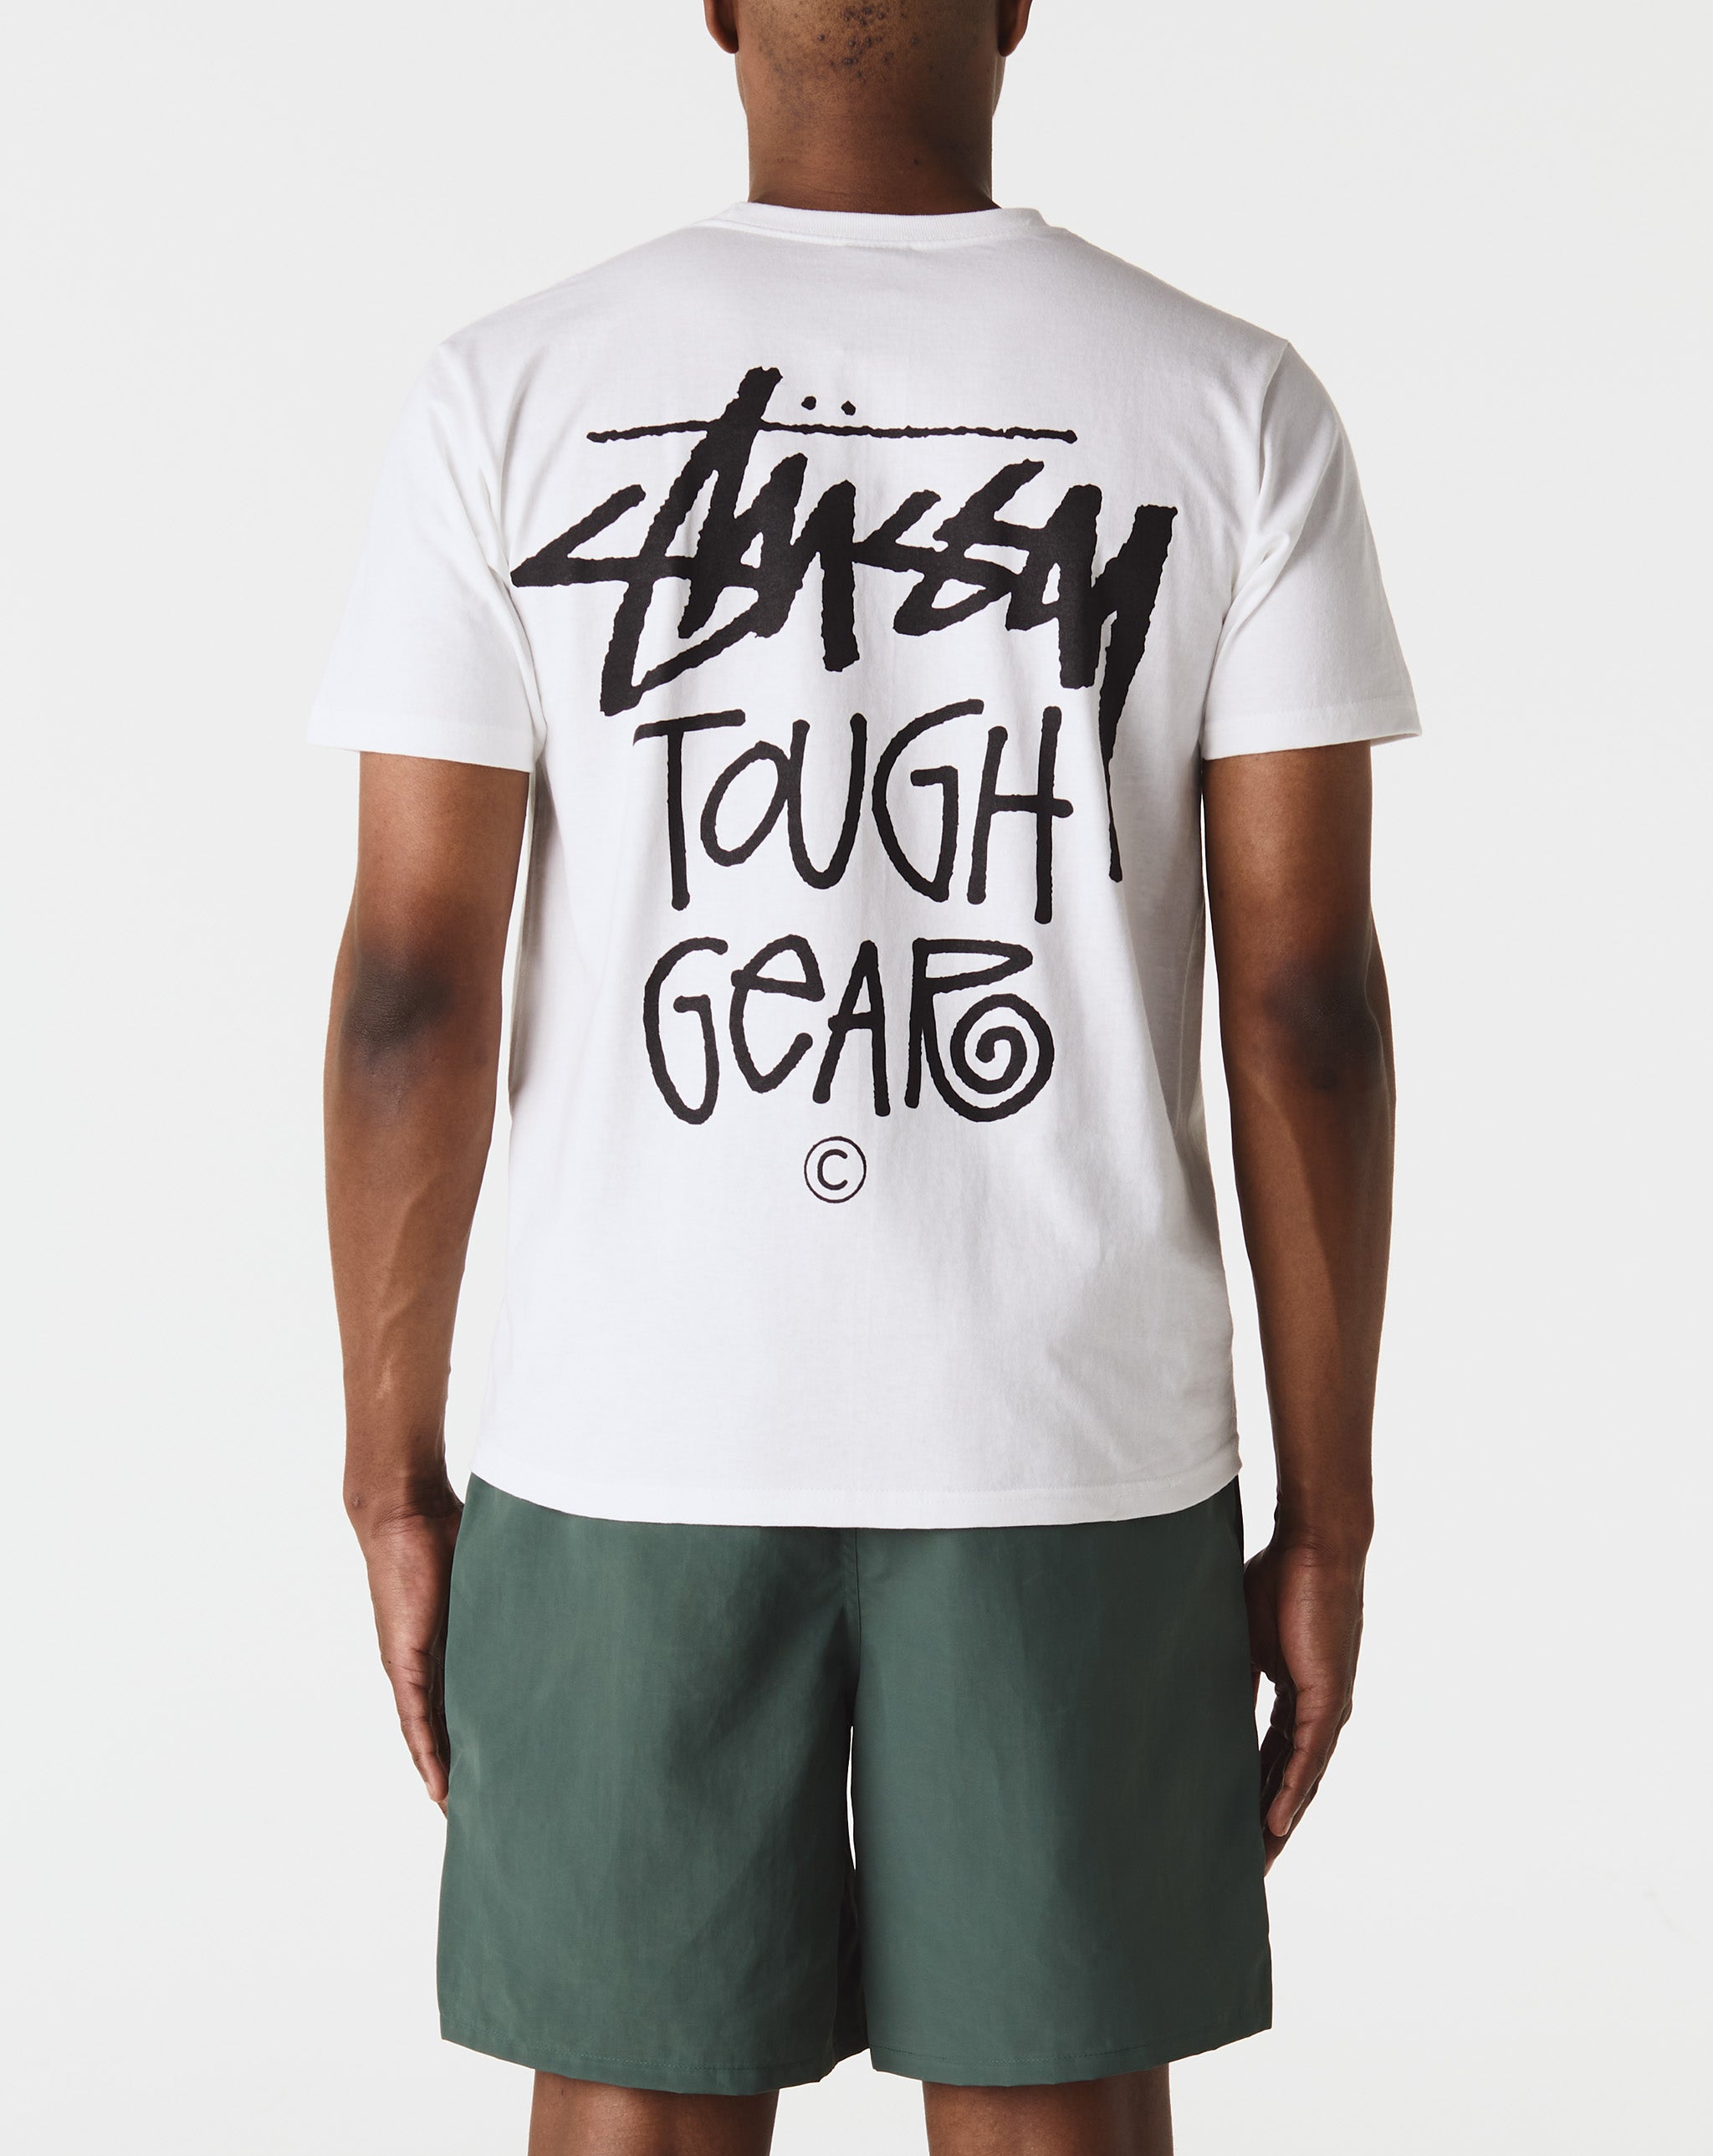 Stüssy Tough Gear T-Shirt  - XHIBITION